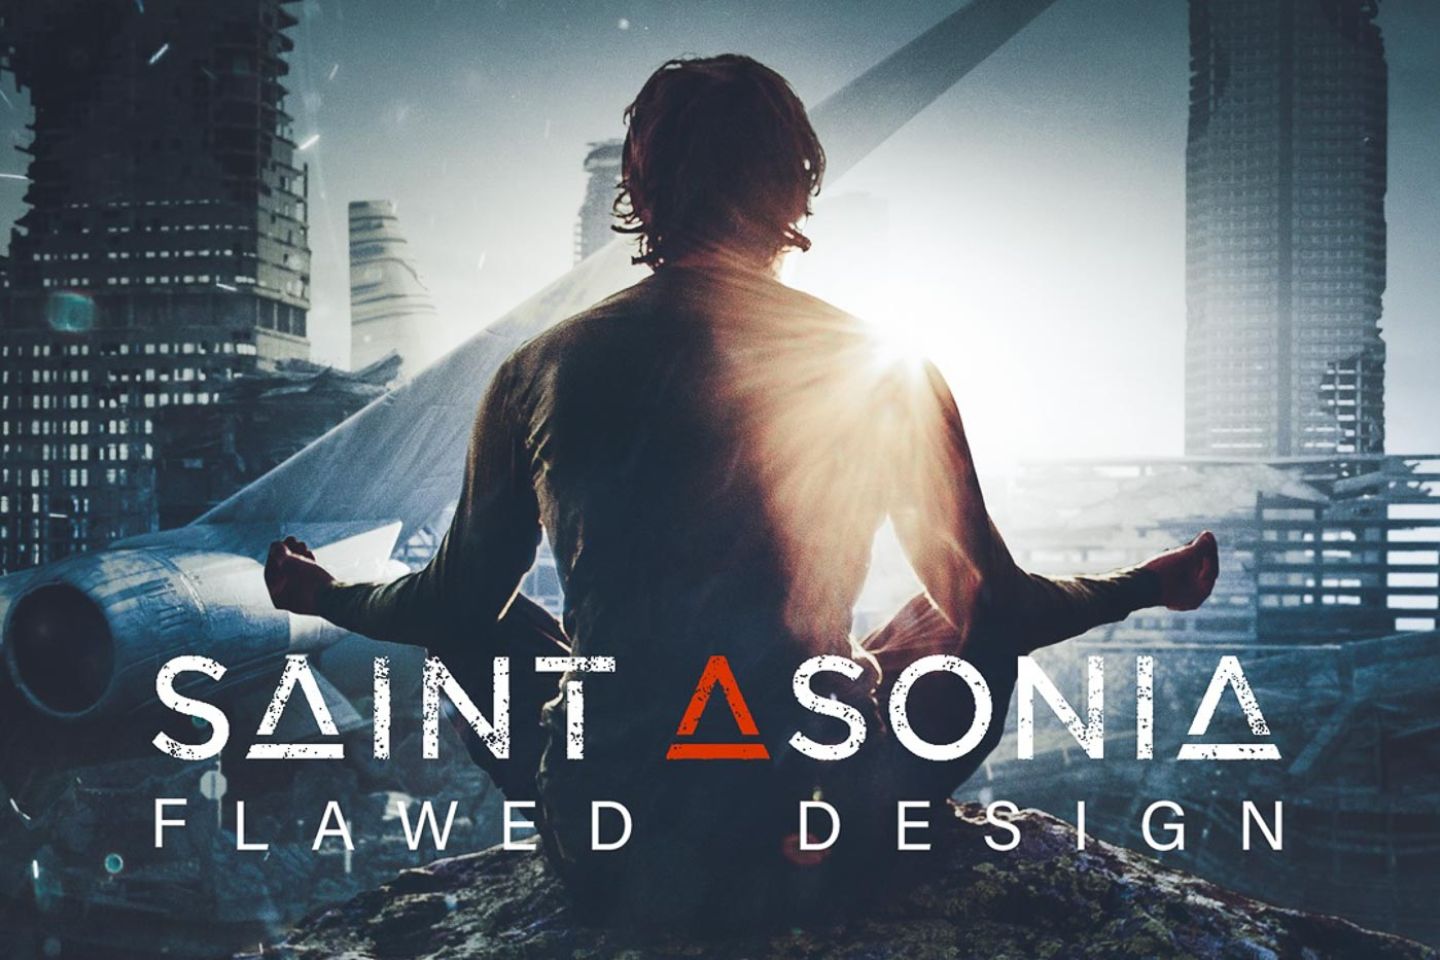 Saint Asonia “Flawed Design” (Spinefarm Records, 2019)